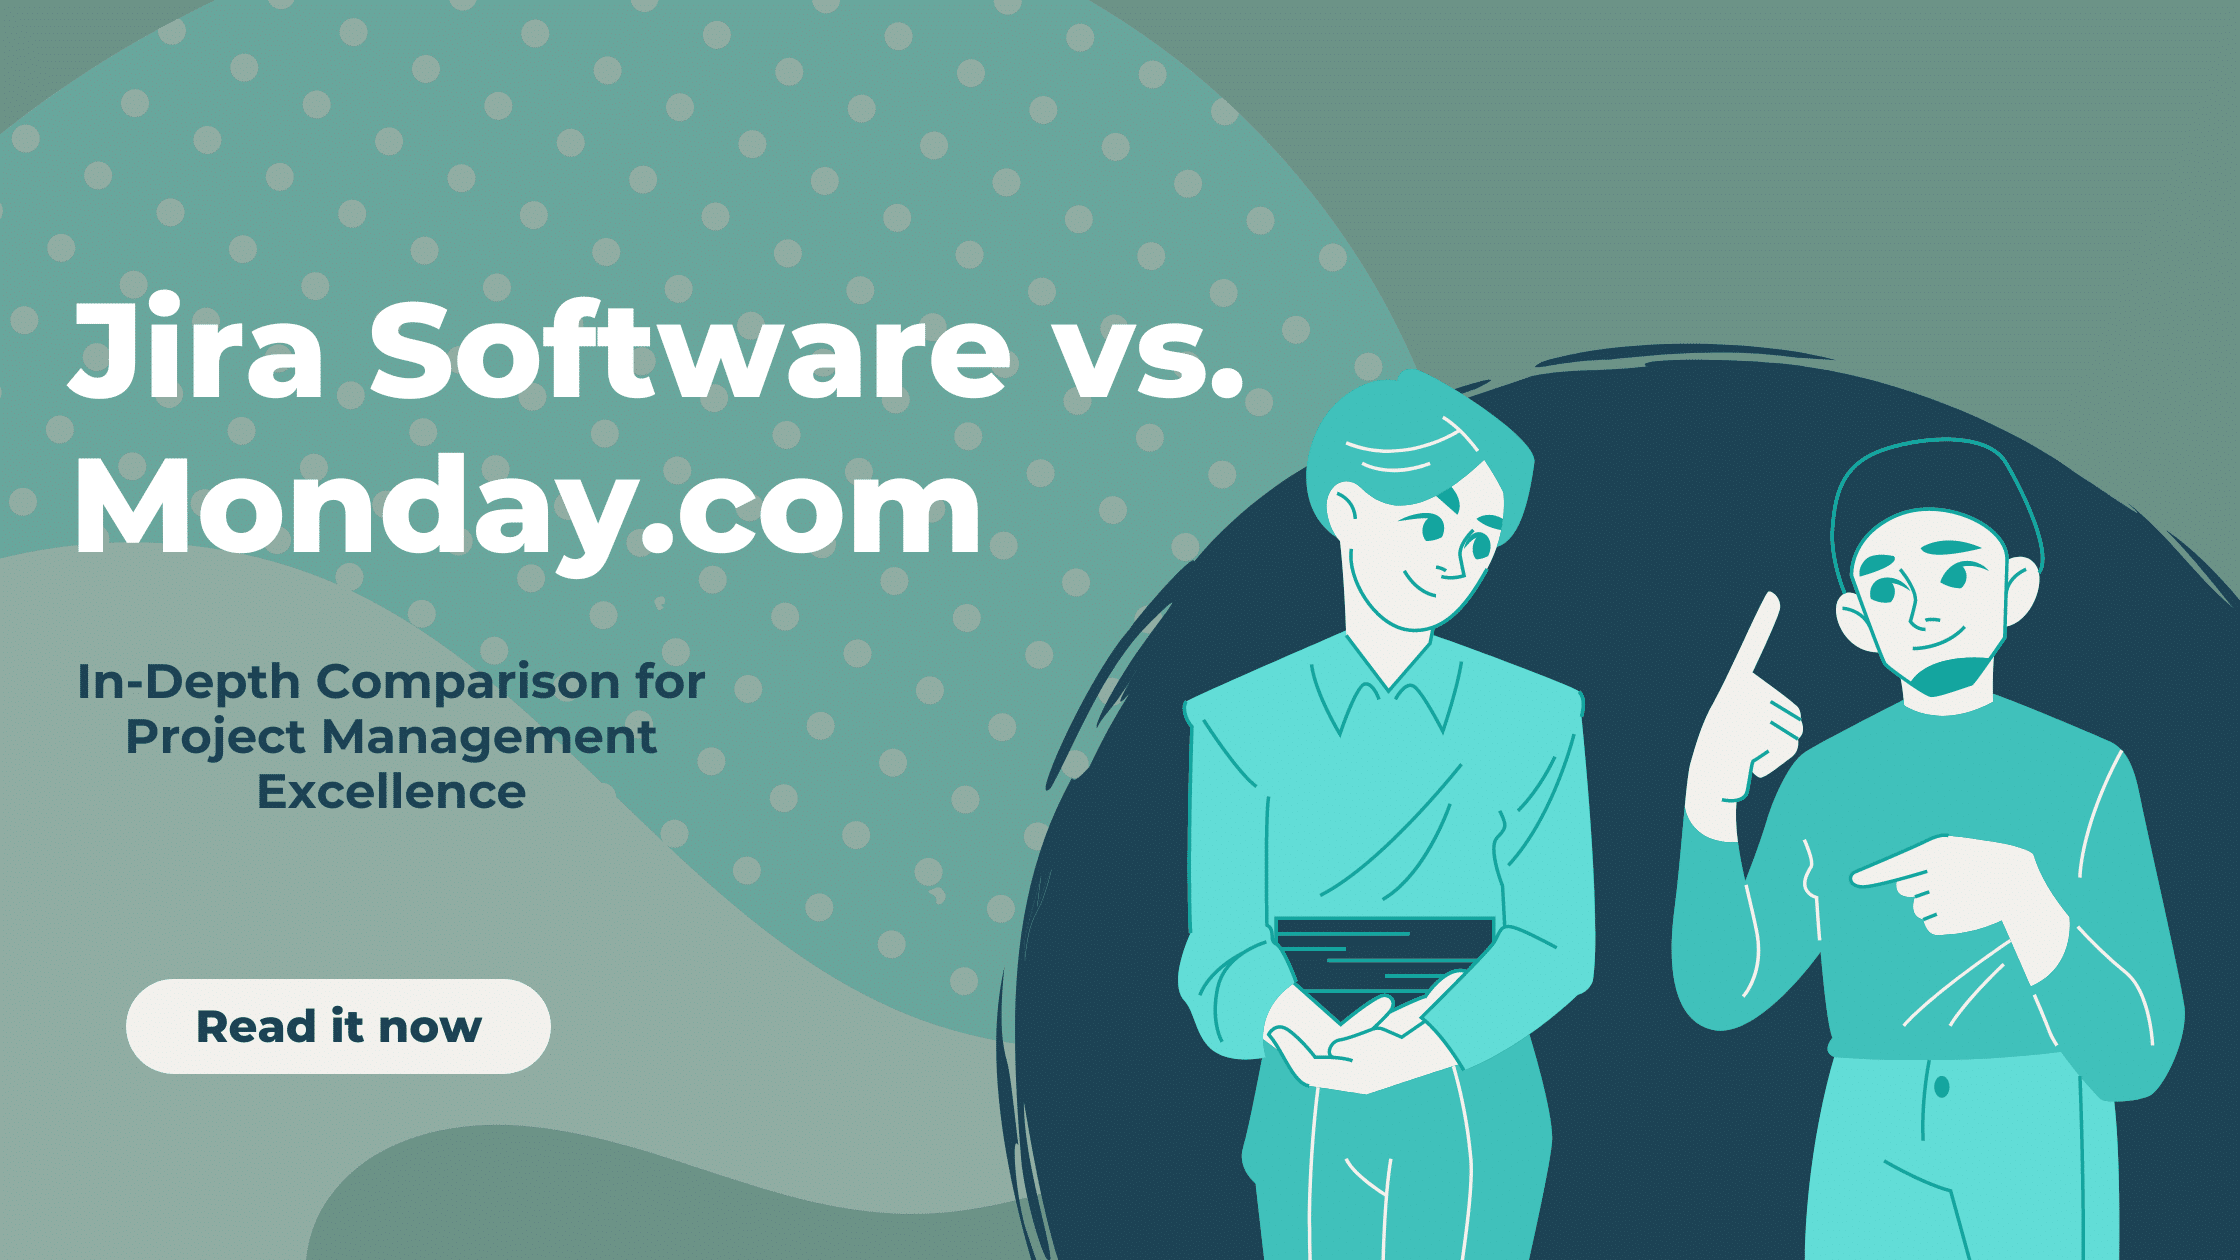 Jira Software vs. Monday.com